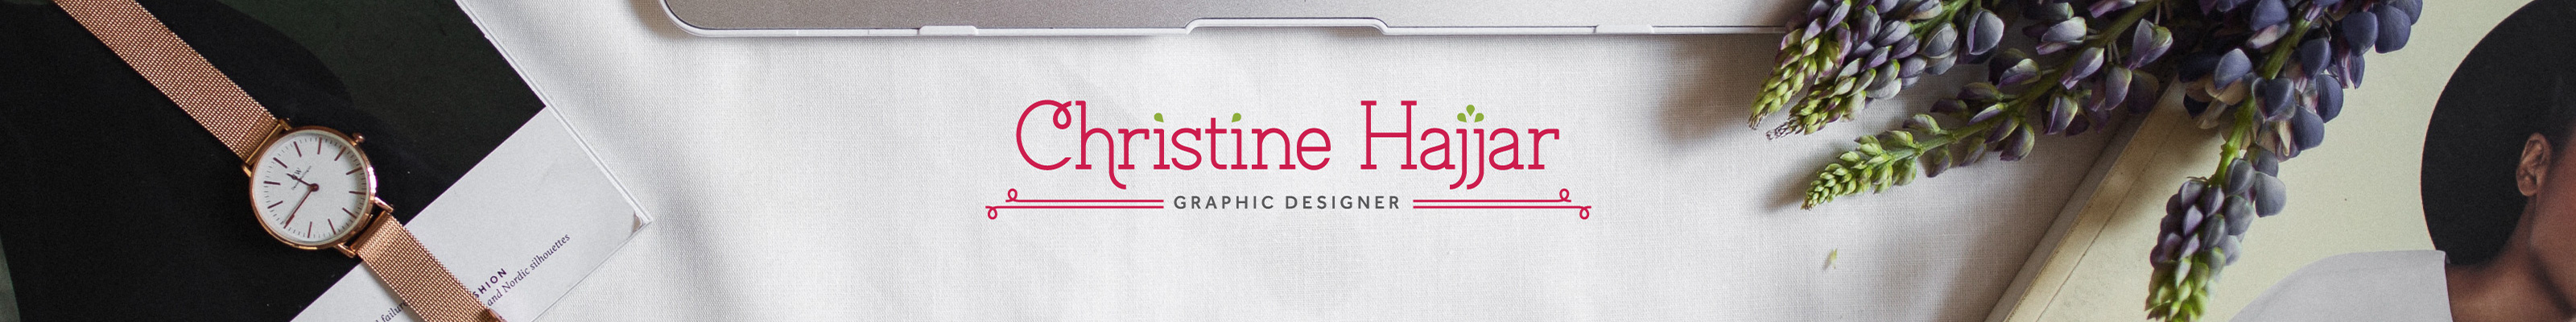 Christine Hajjar's profile banner